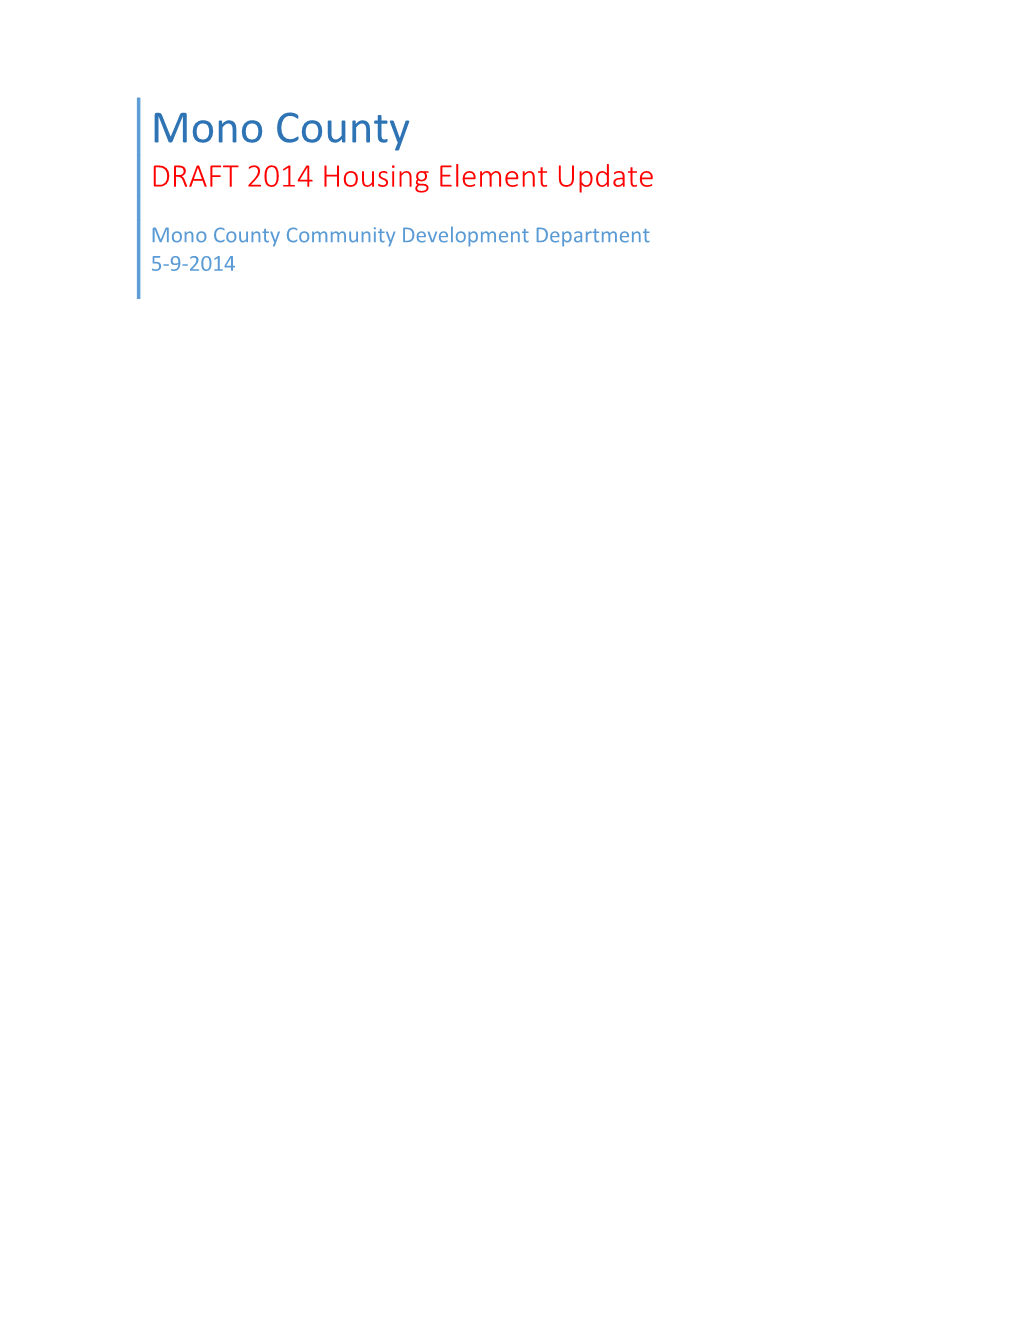 DRAFT 2014 Housing Element Update